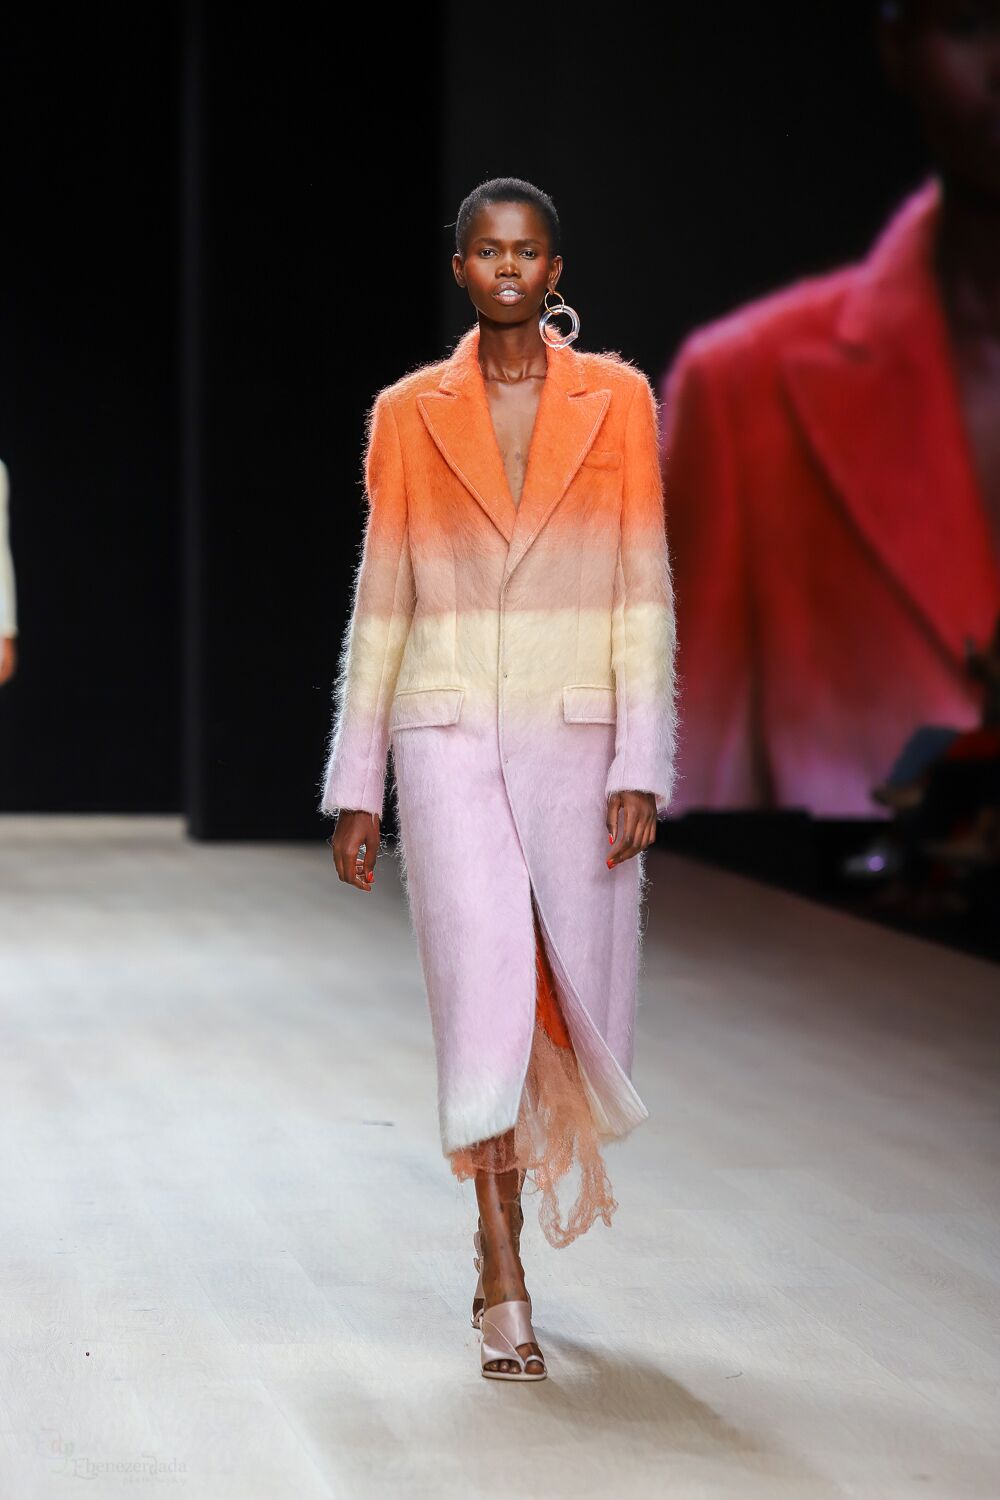 arise-fashion-week-2019-esteban-cortazar-unveiled-sleek-yet-expressive-fashion